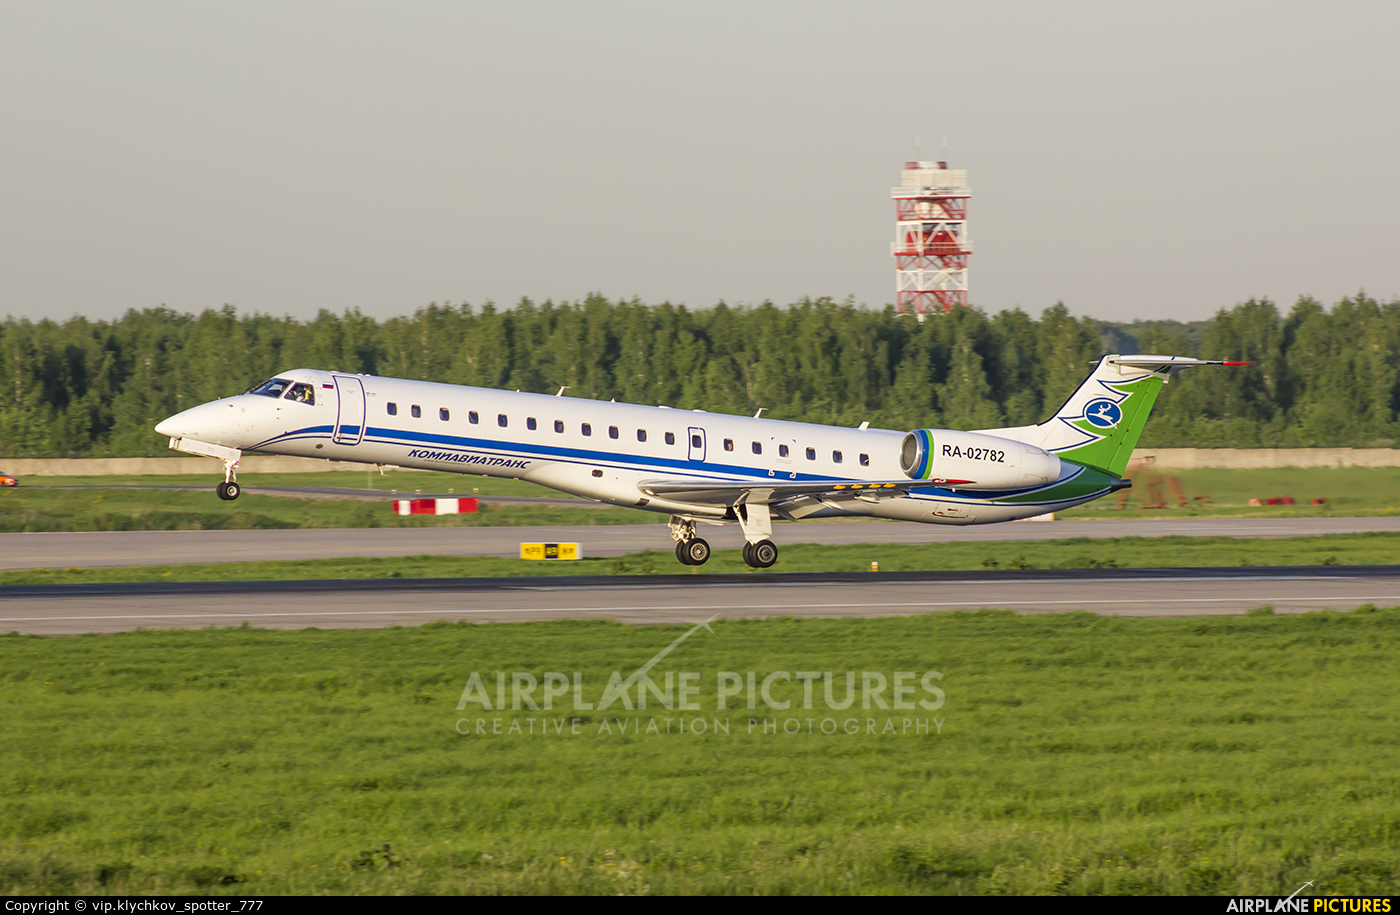 KomiAviaTrans RA-02782 aircraft at Moscow - Domodedovo